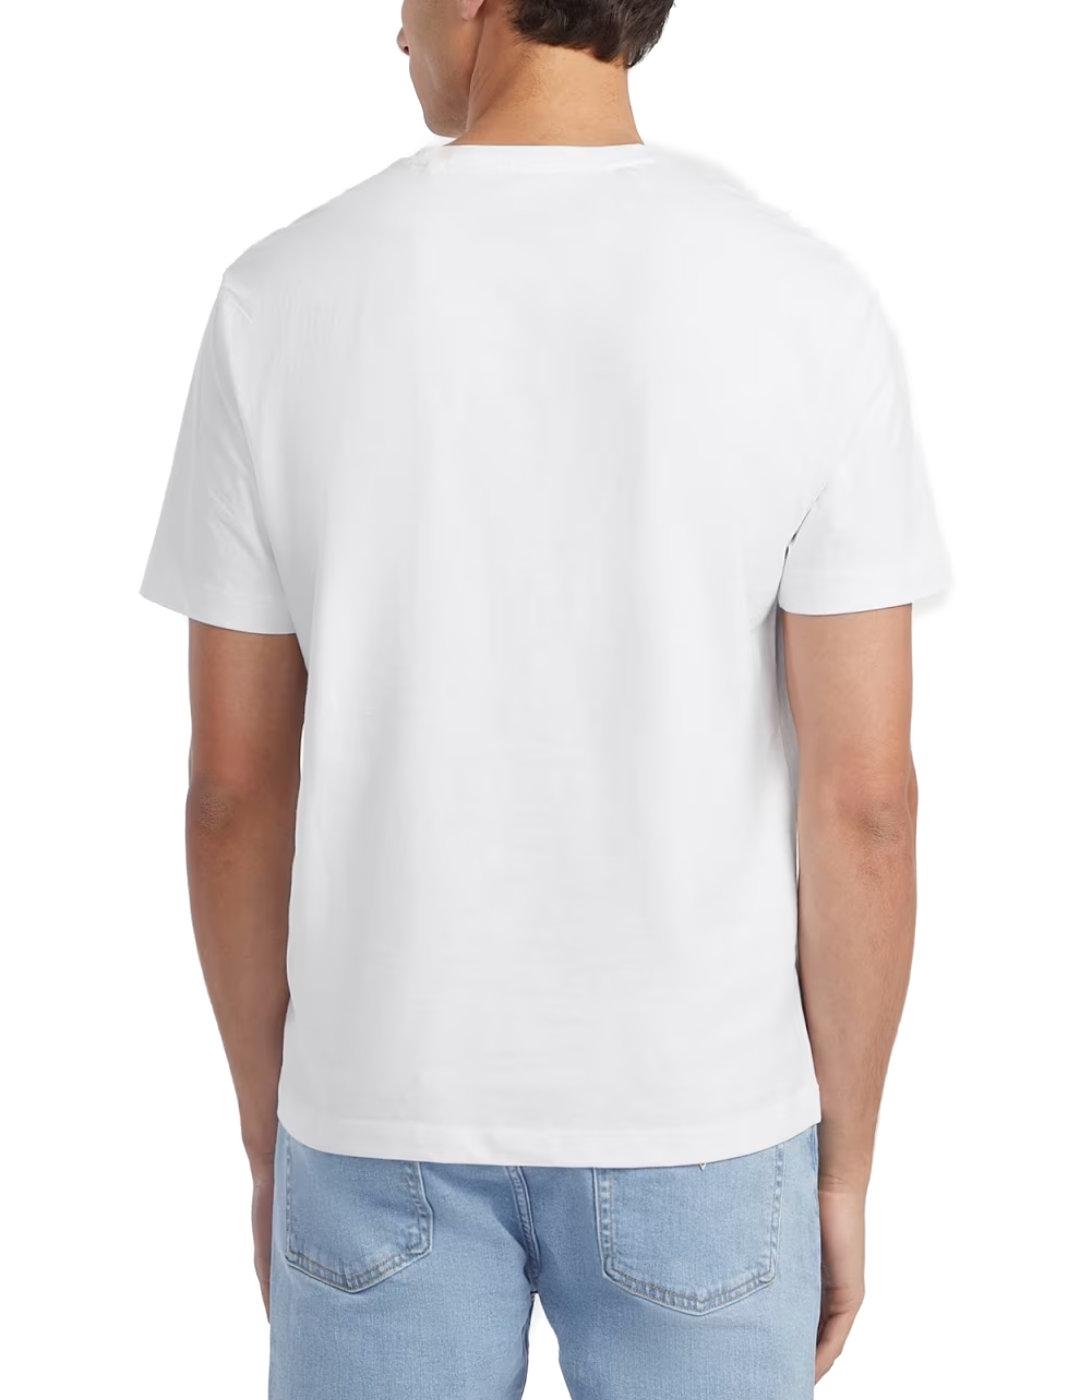 Camiseta Guess Jeans blanco manga corta para hombre